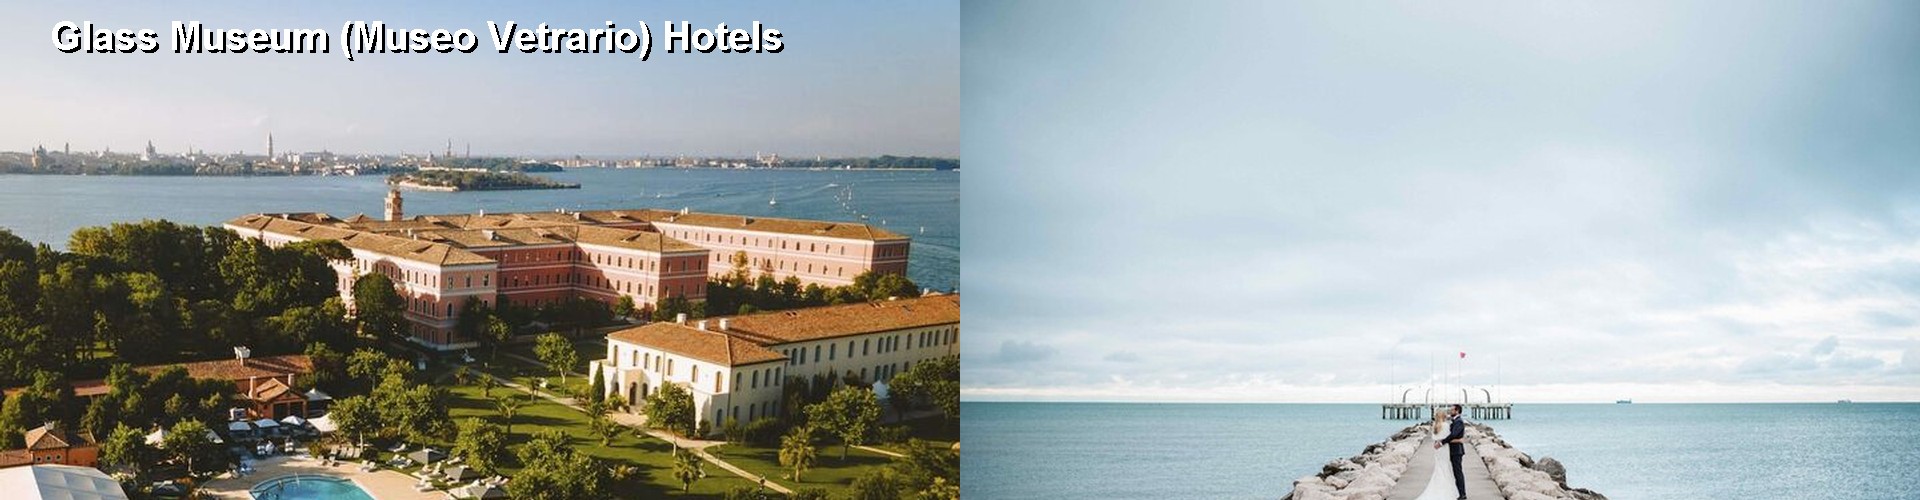 5 Best Hotels near Glass Museum (Museo Vetrario)